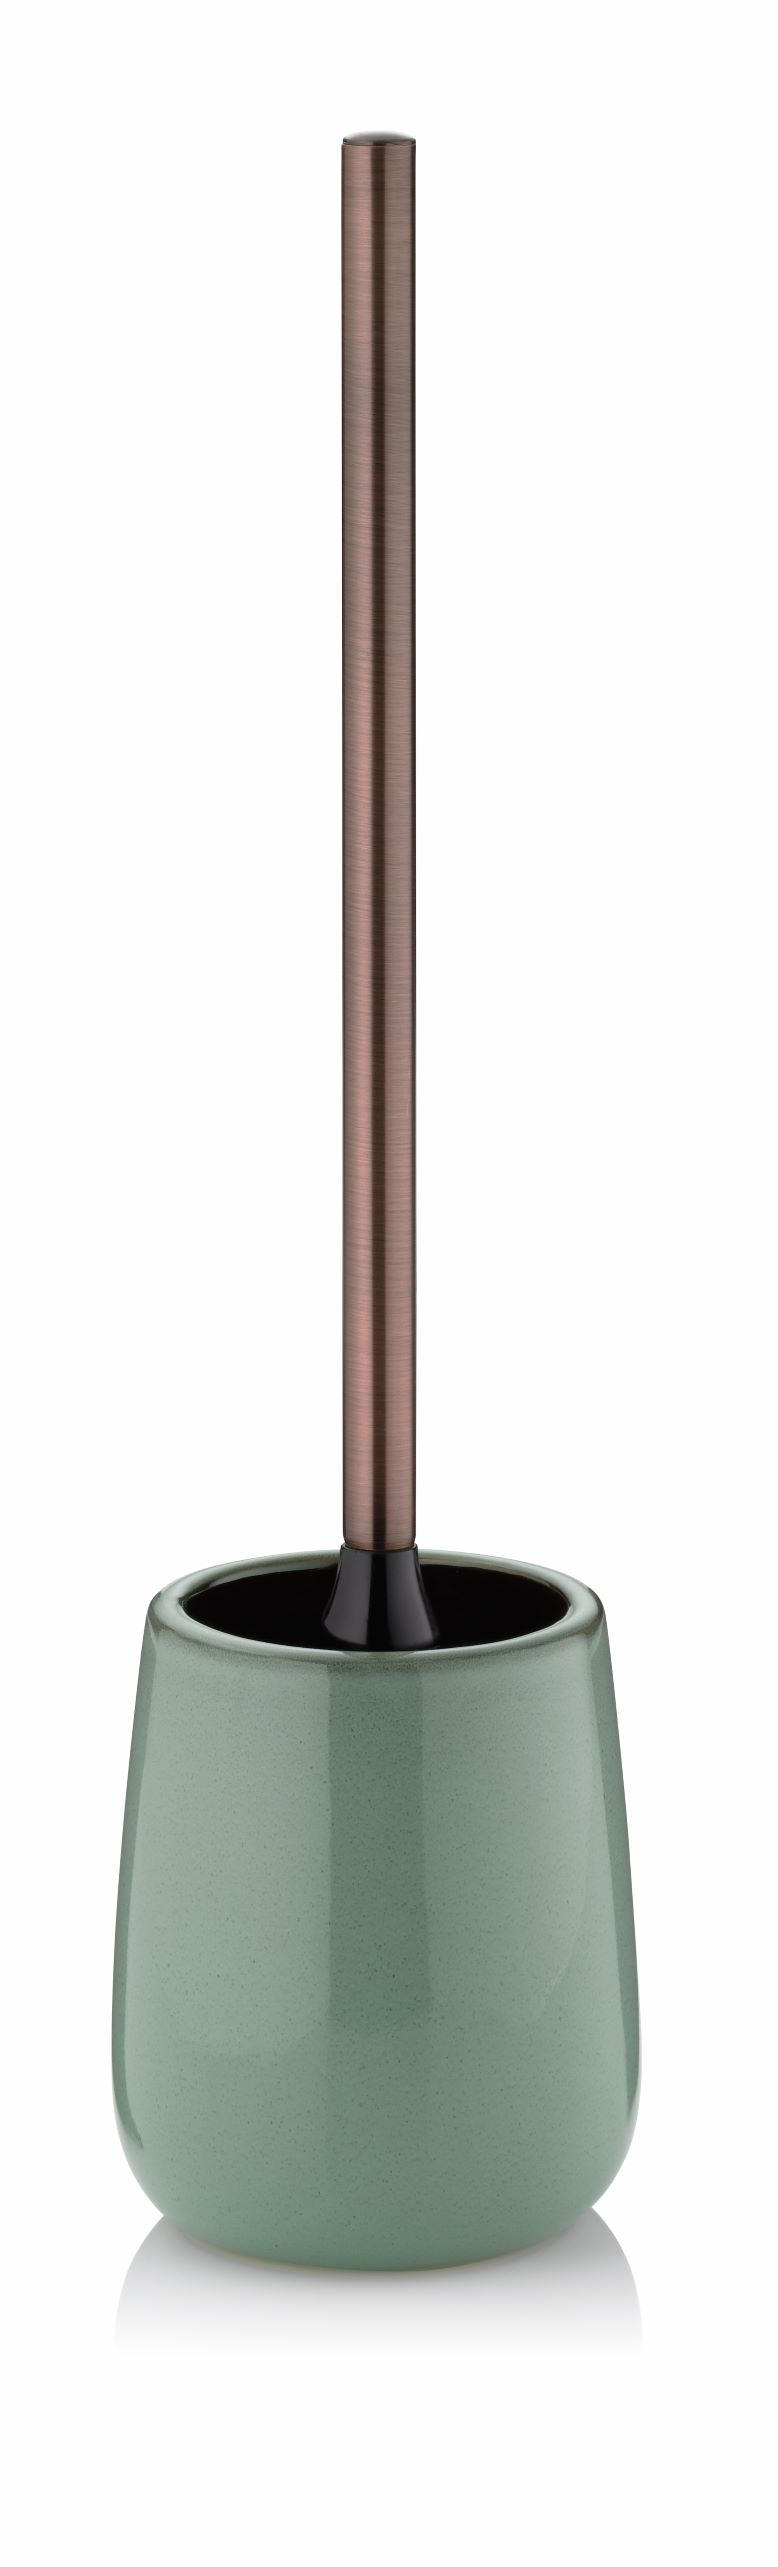 WC-BÜRSTENGARNITUR - Grün, Basics, Keramik (11,0/44,5cm) - Kela